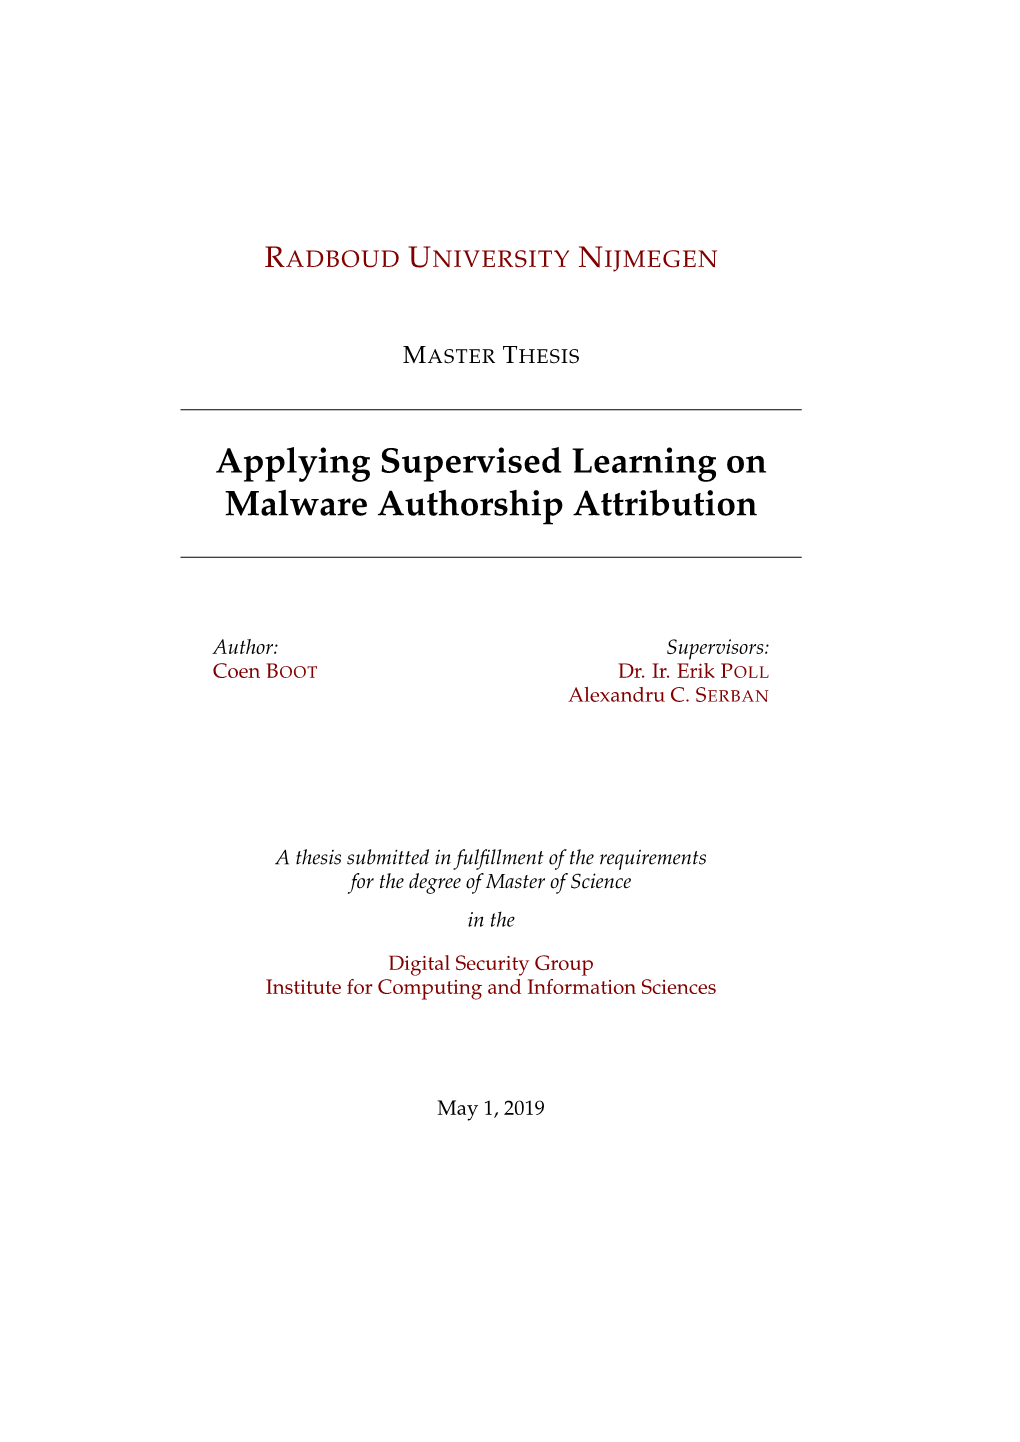 Applying Supervised Learning on Malware Authorship Attribution